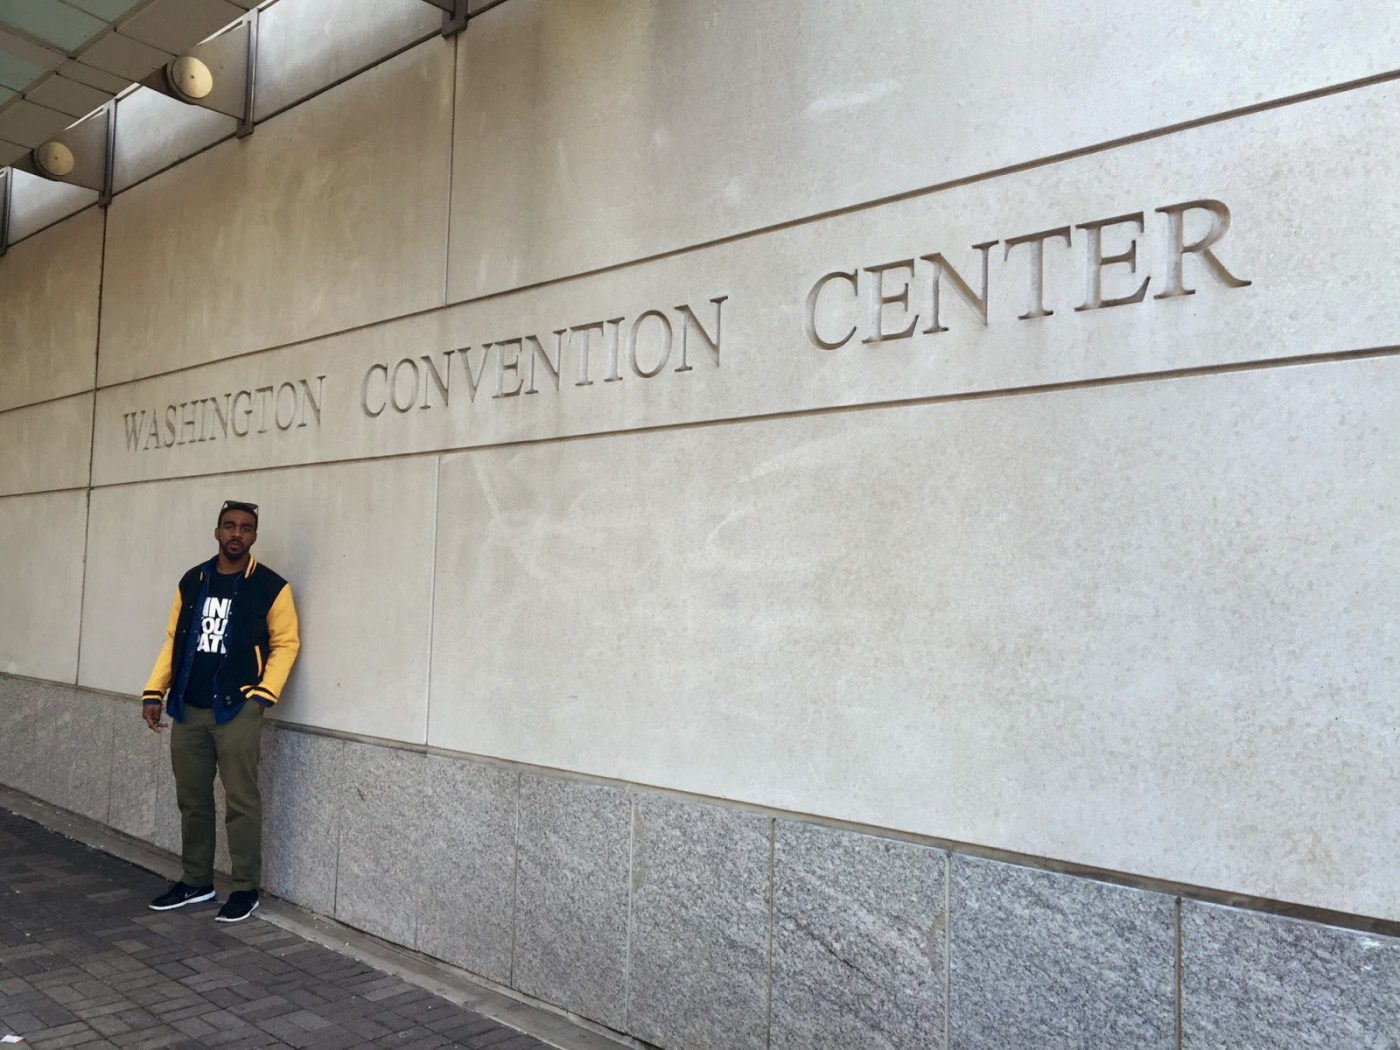 Washington Convention Center DC